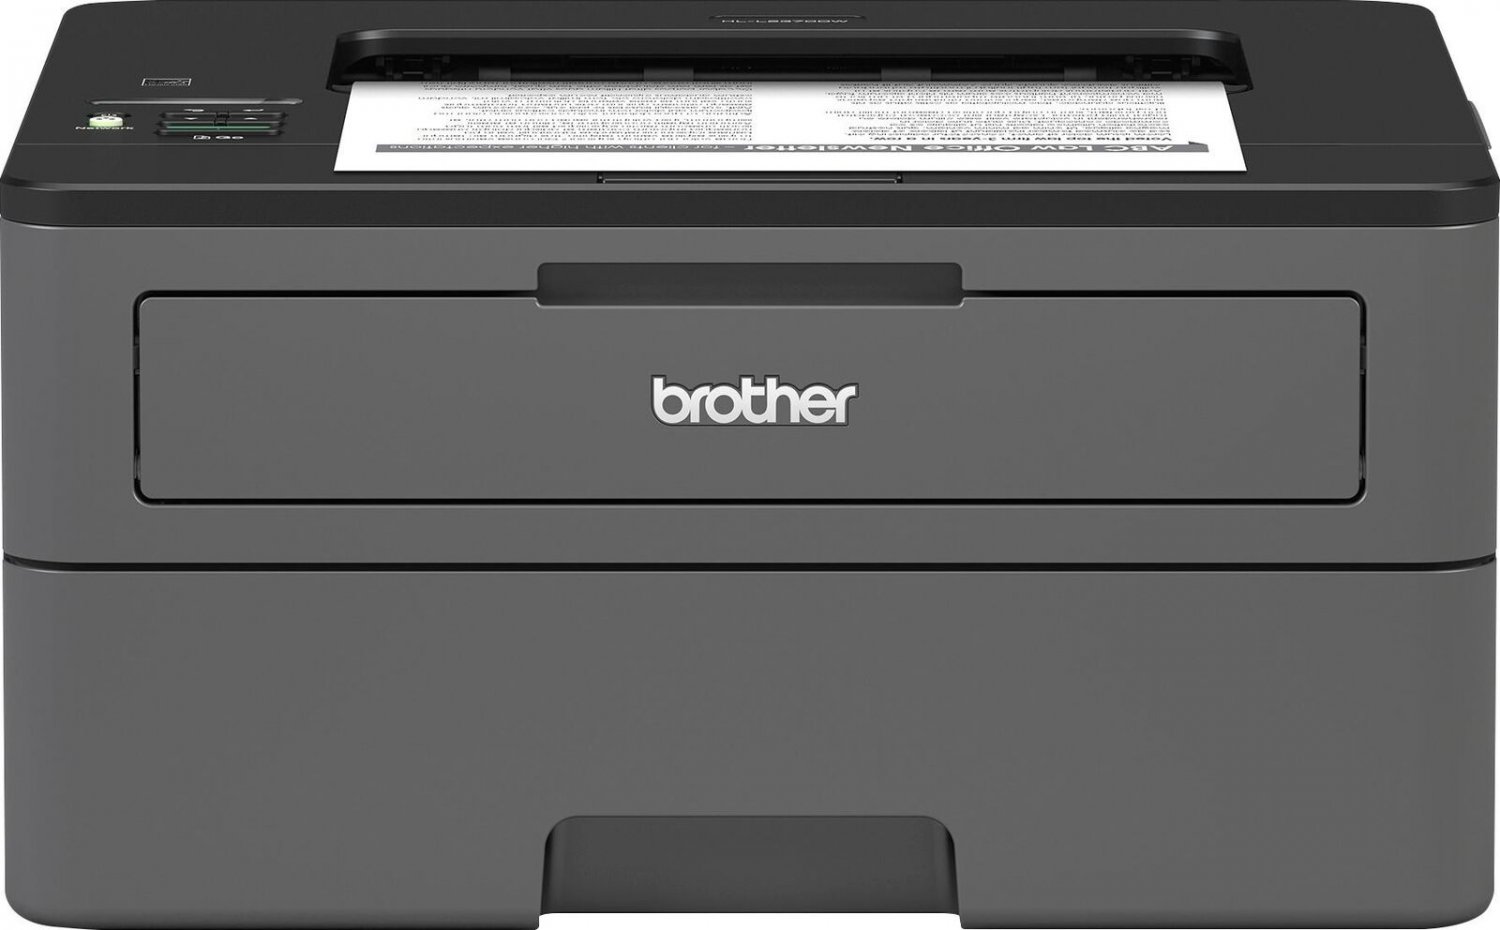 Brother - HL-L2370DW Wireless Printer